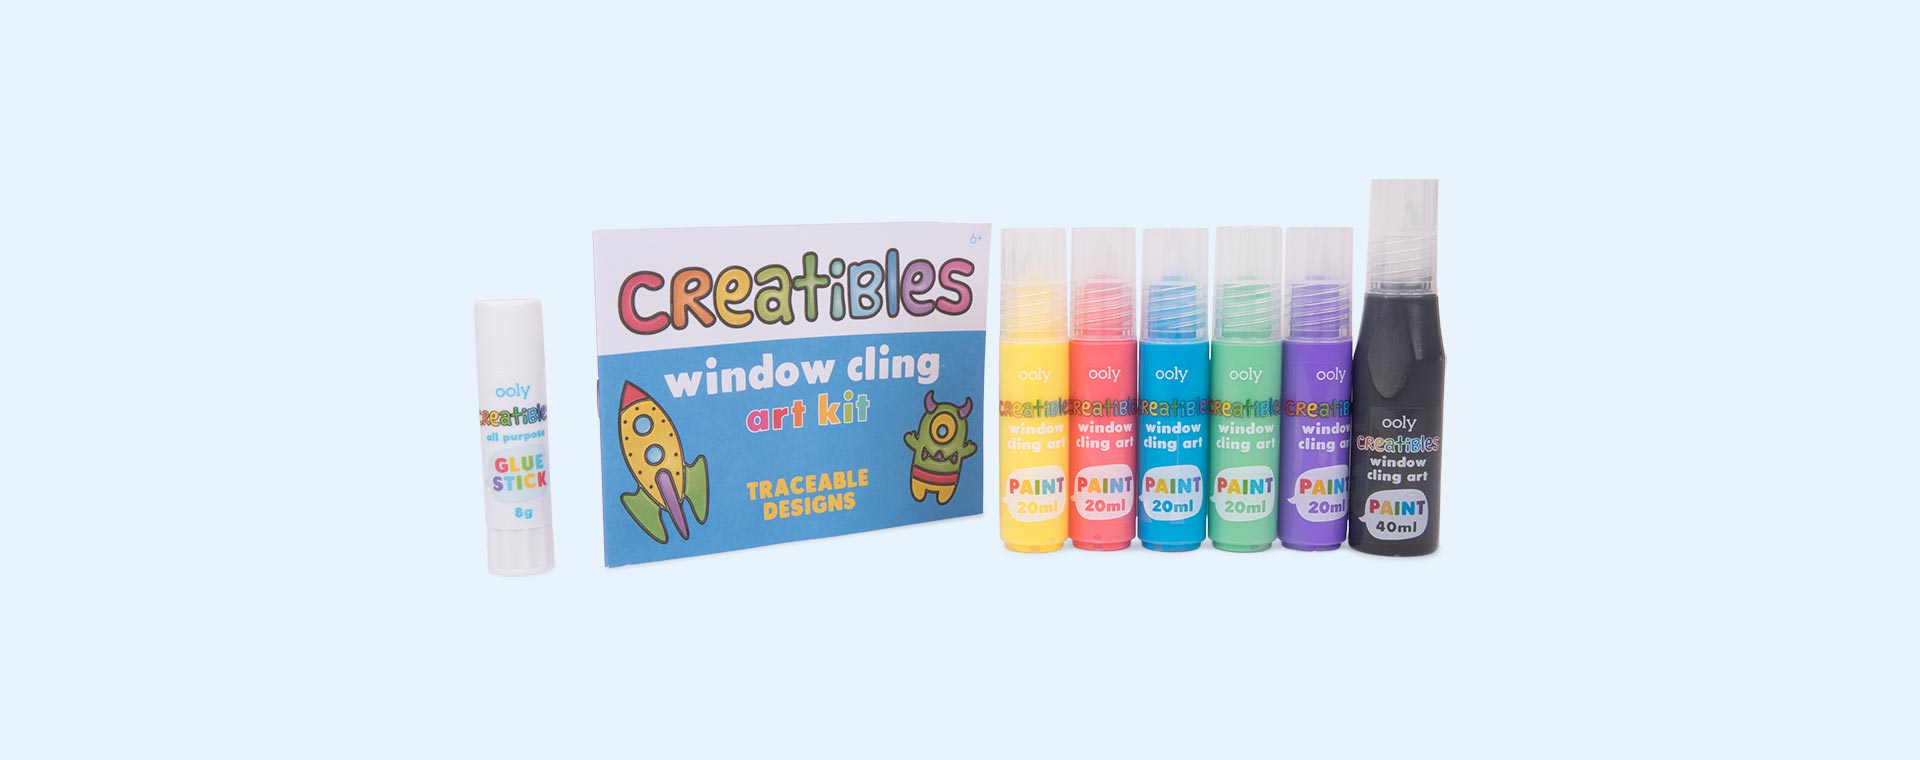 Ooly Creatibles DIY Window Cling Art Kit